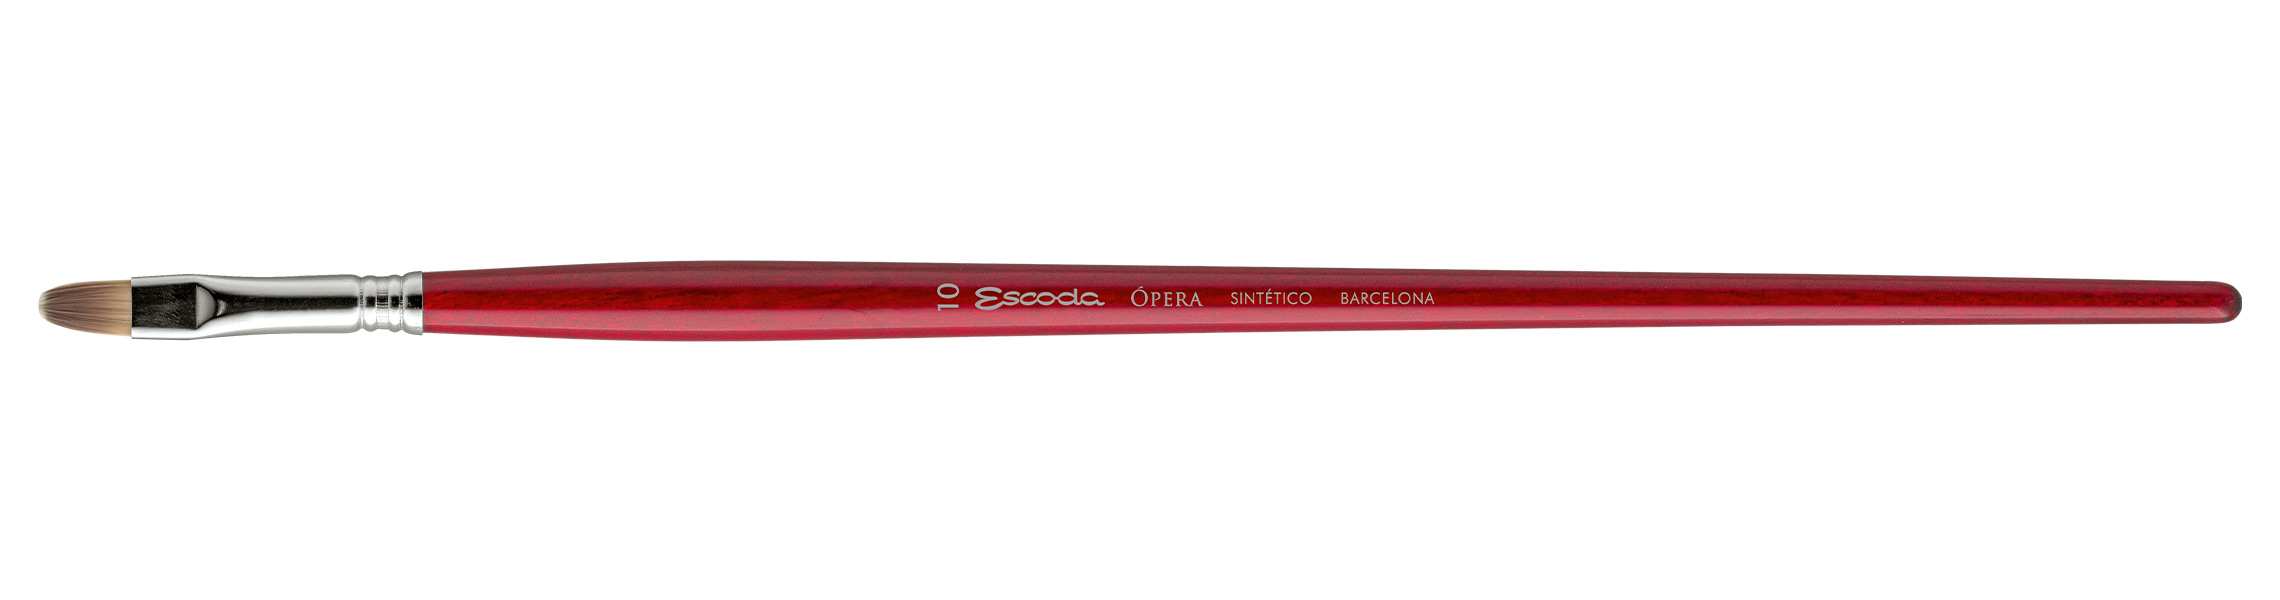 Escoda brushes serie 3050